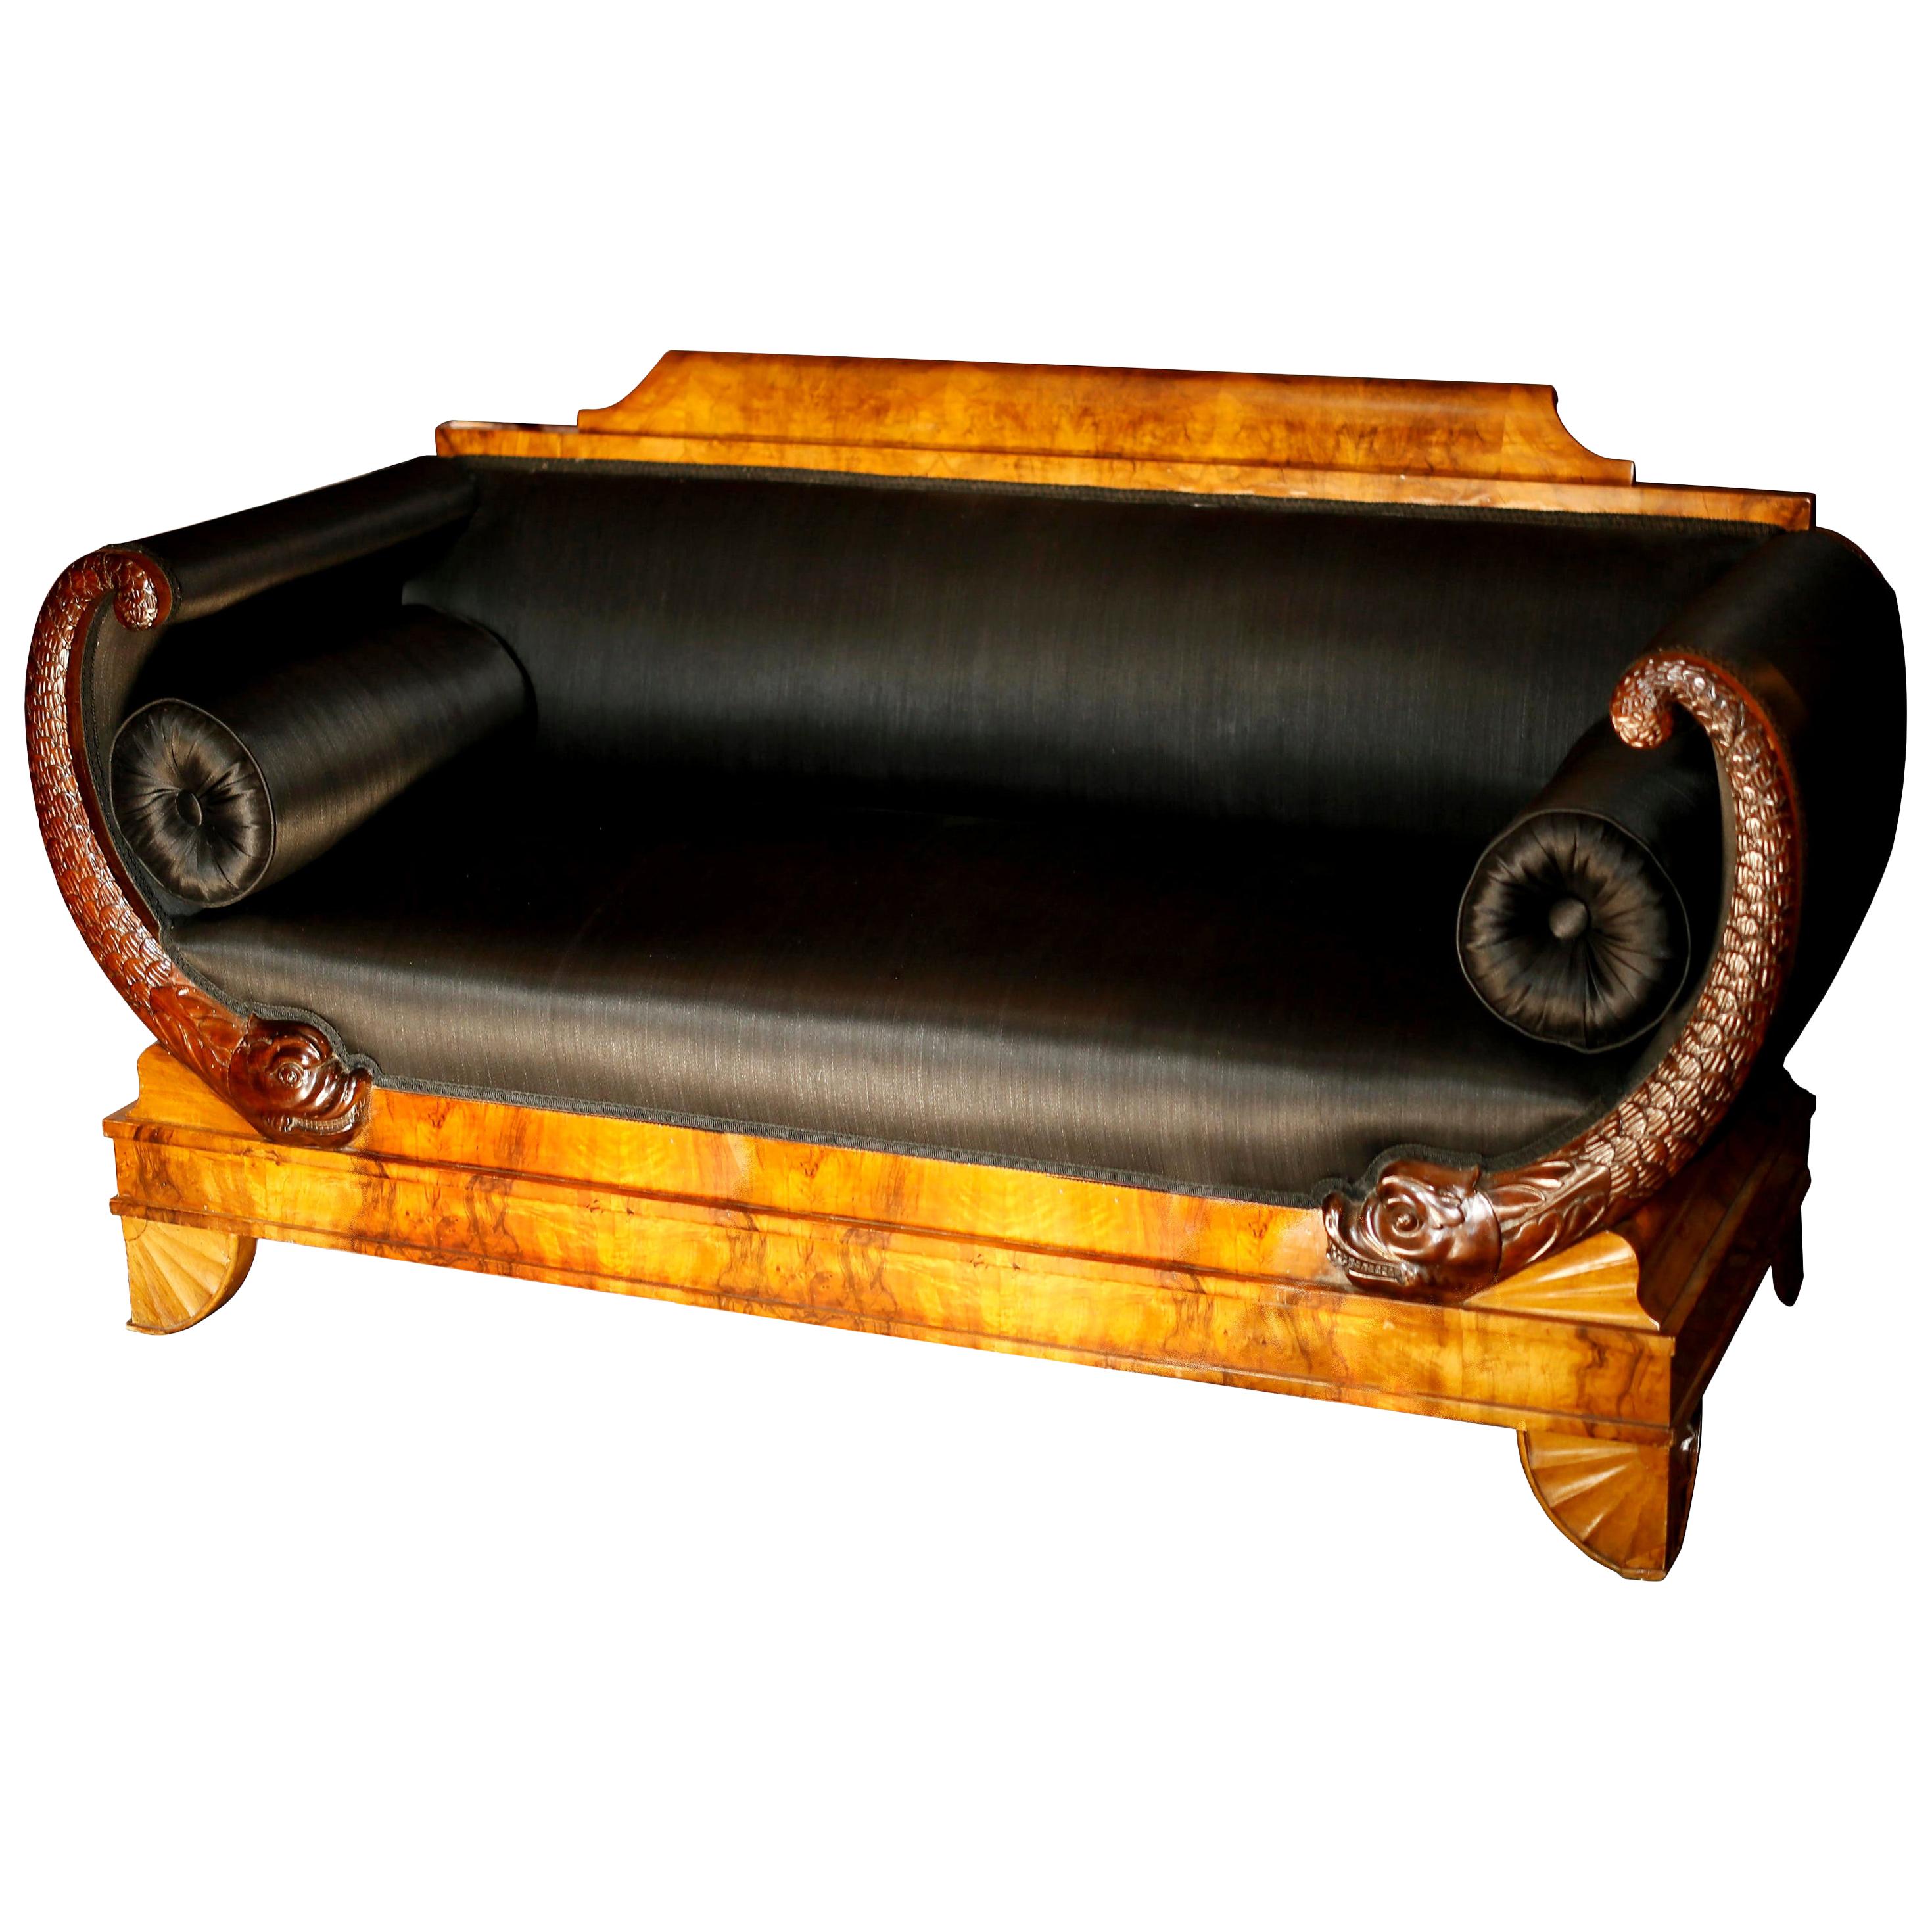 Early 19th Century German Burl Walnut Biedermeier Sofa in Black Horsehair Fabric